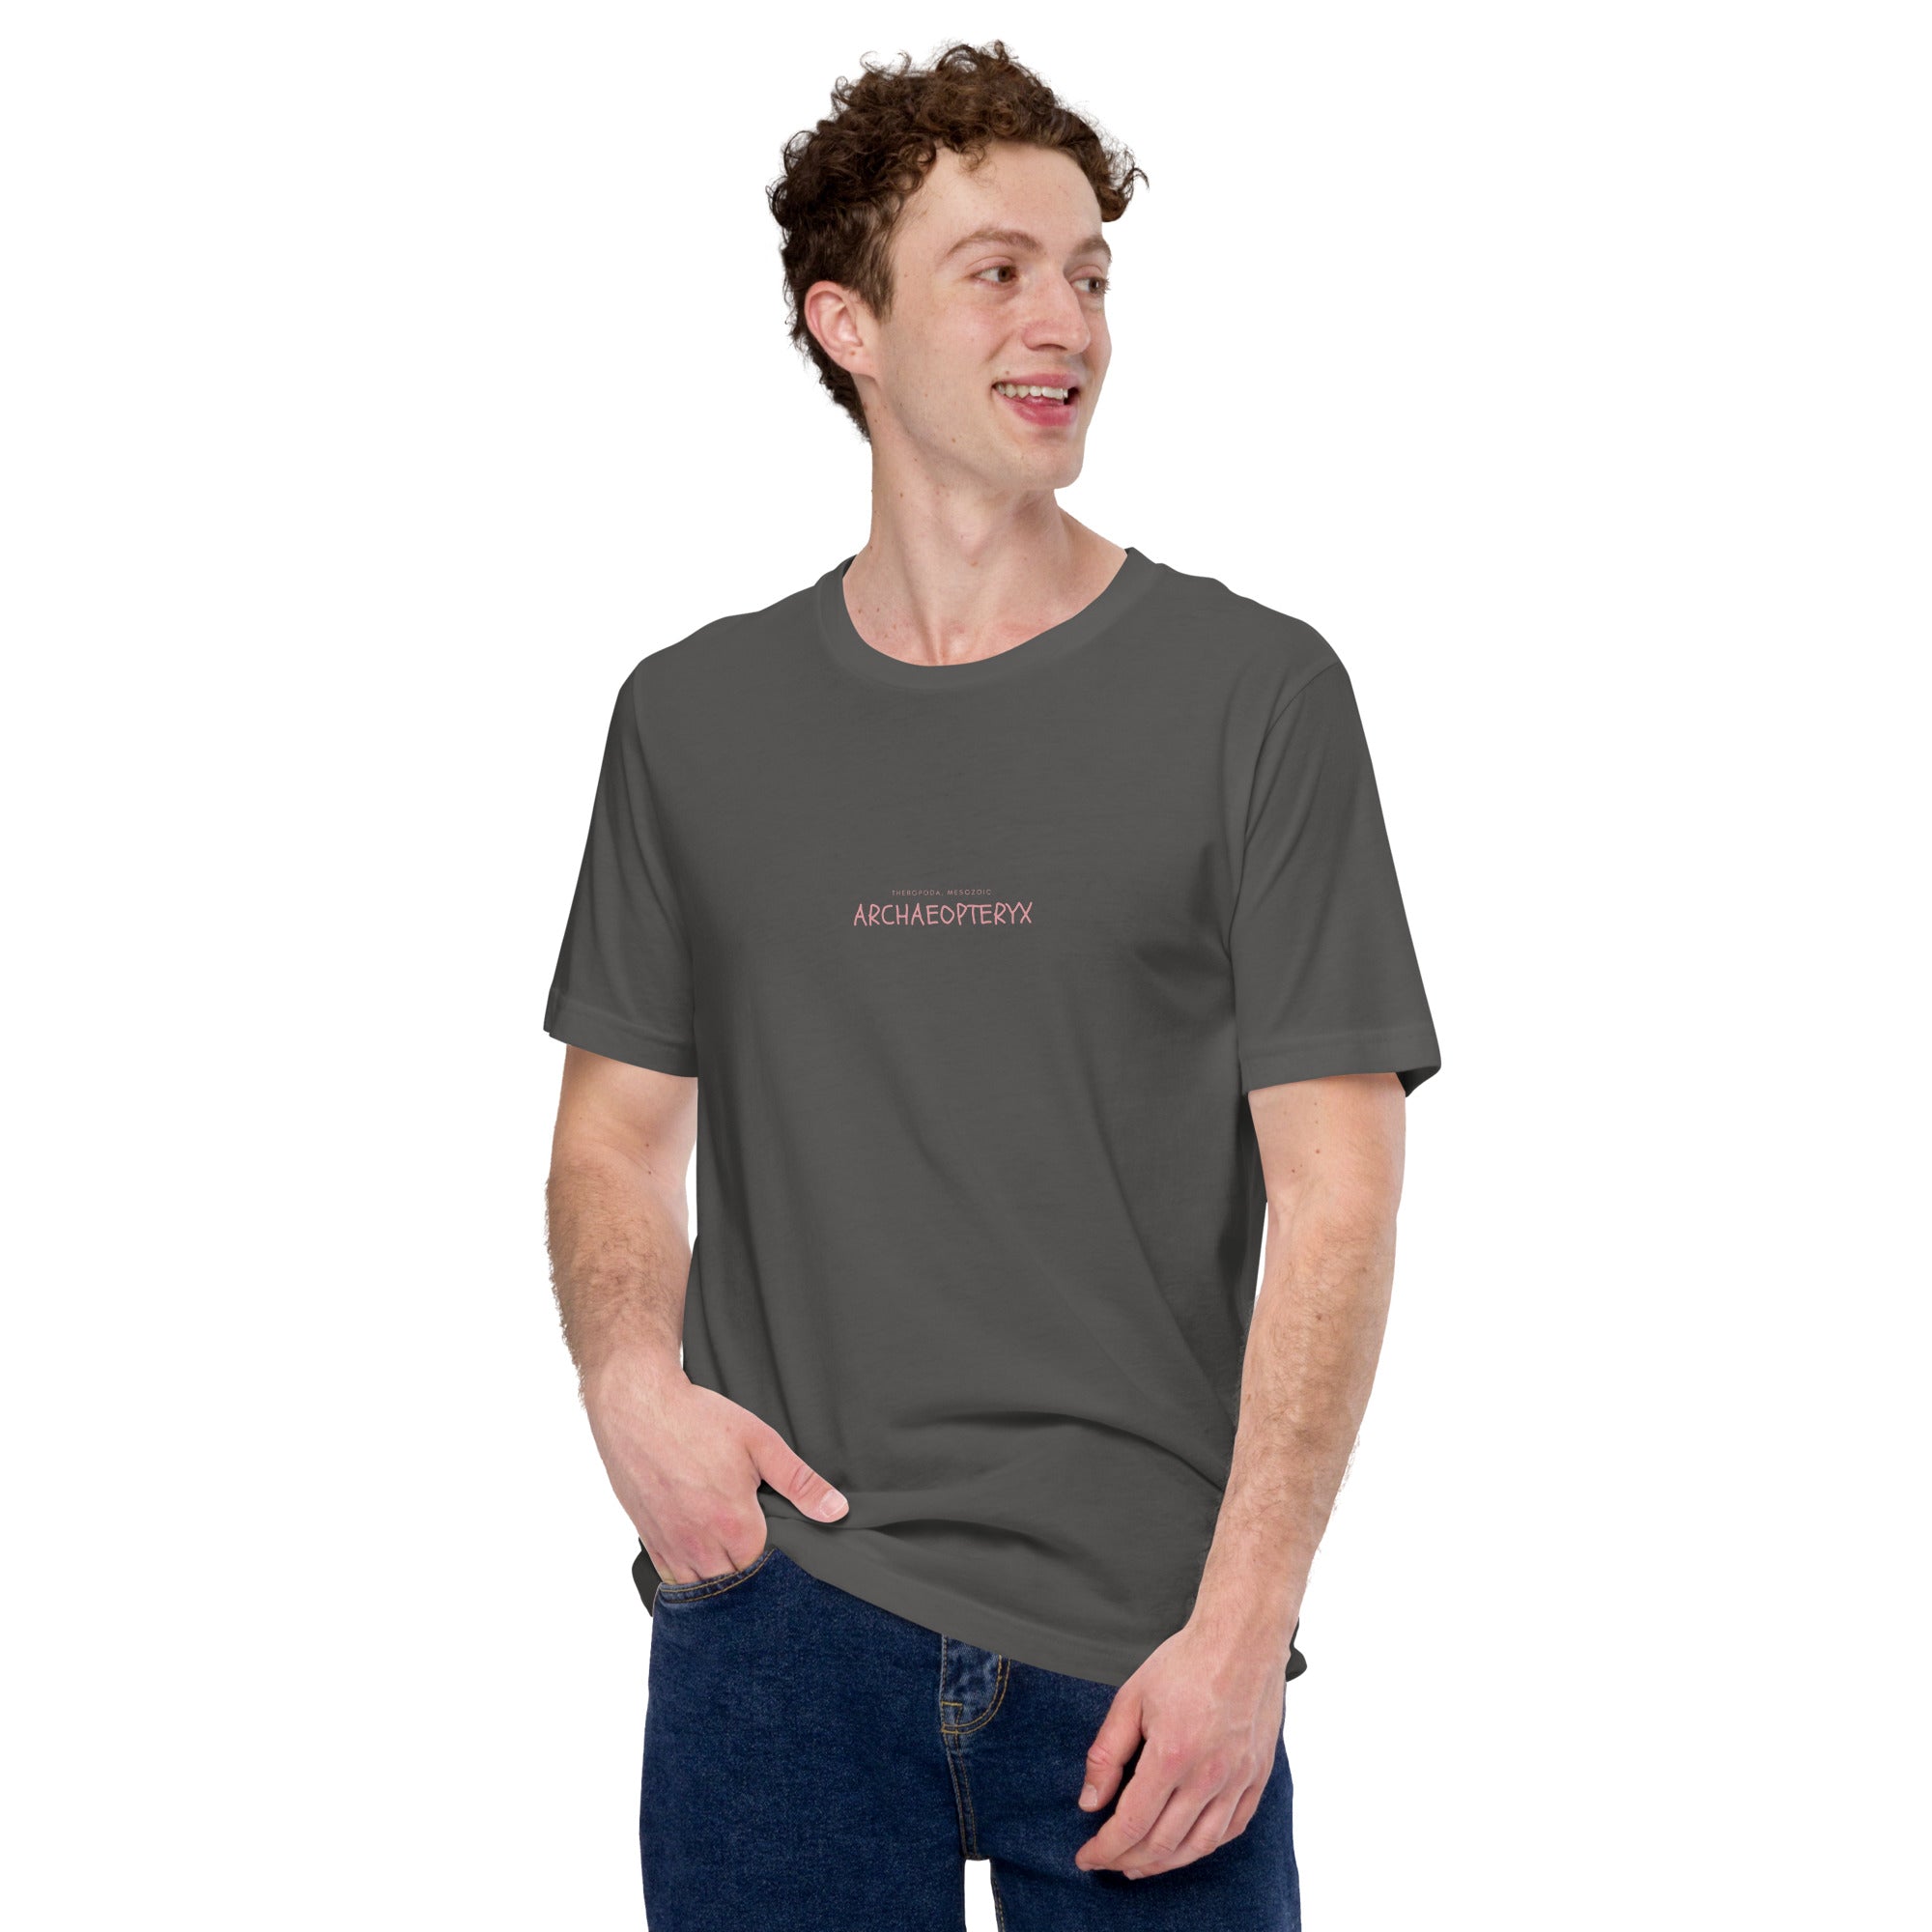 Camiseta unisex con texto "Archaeopteryx"